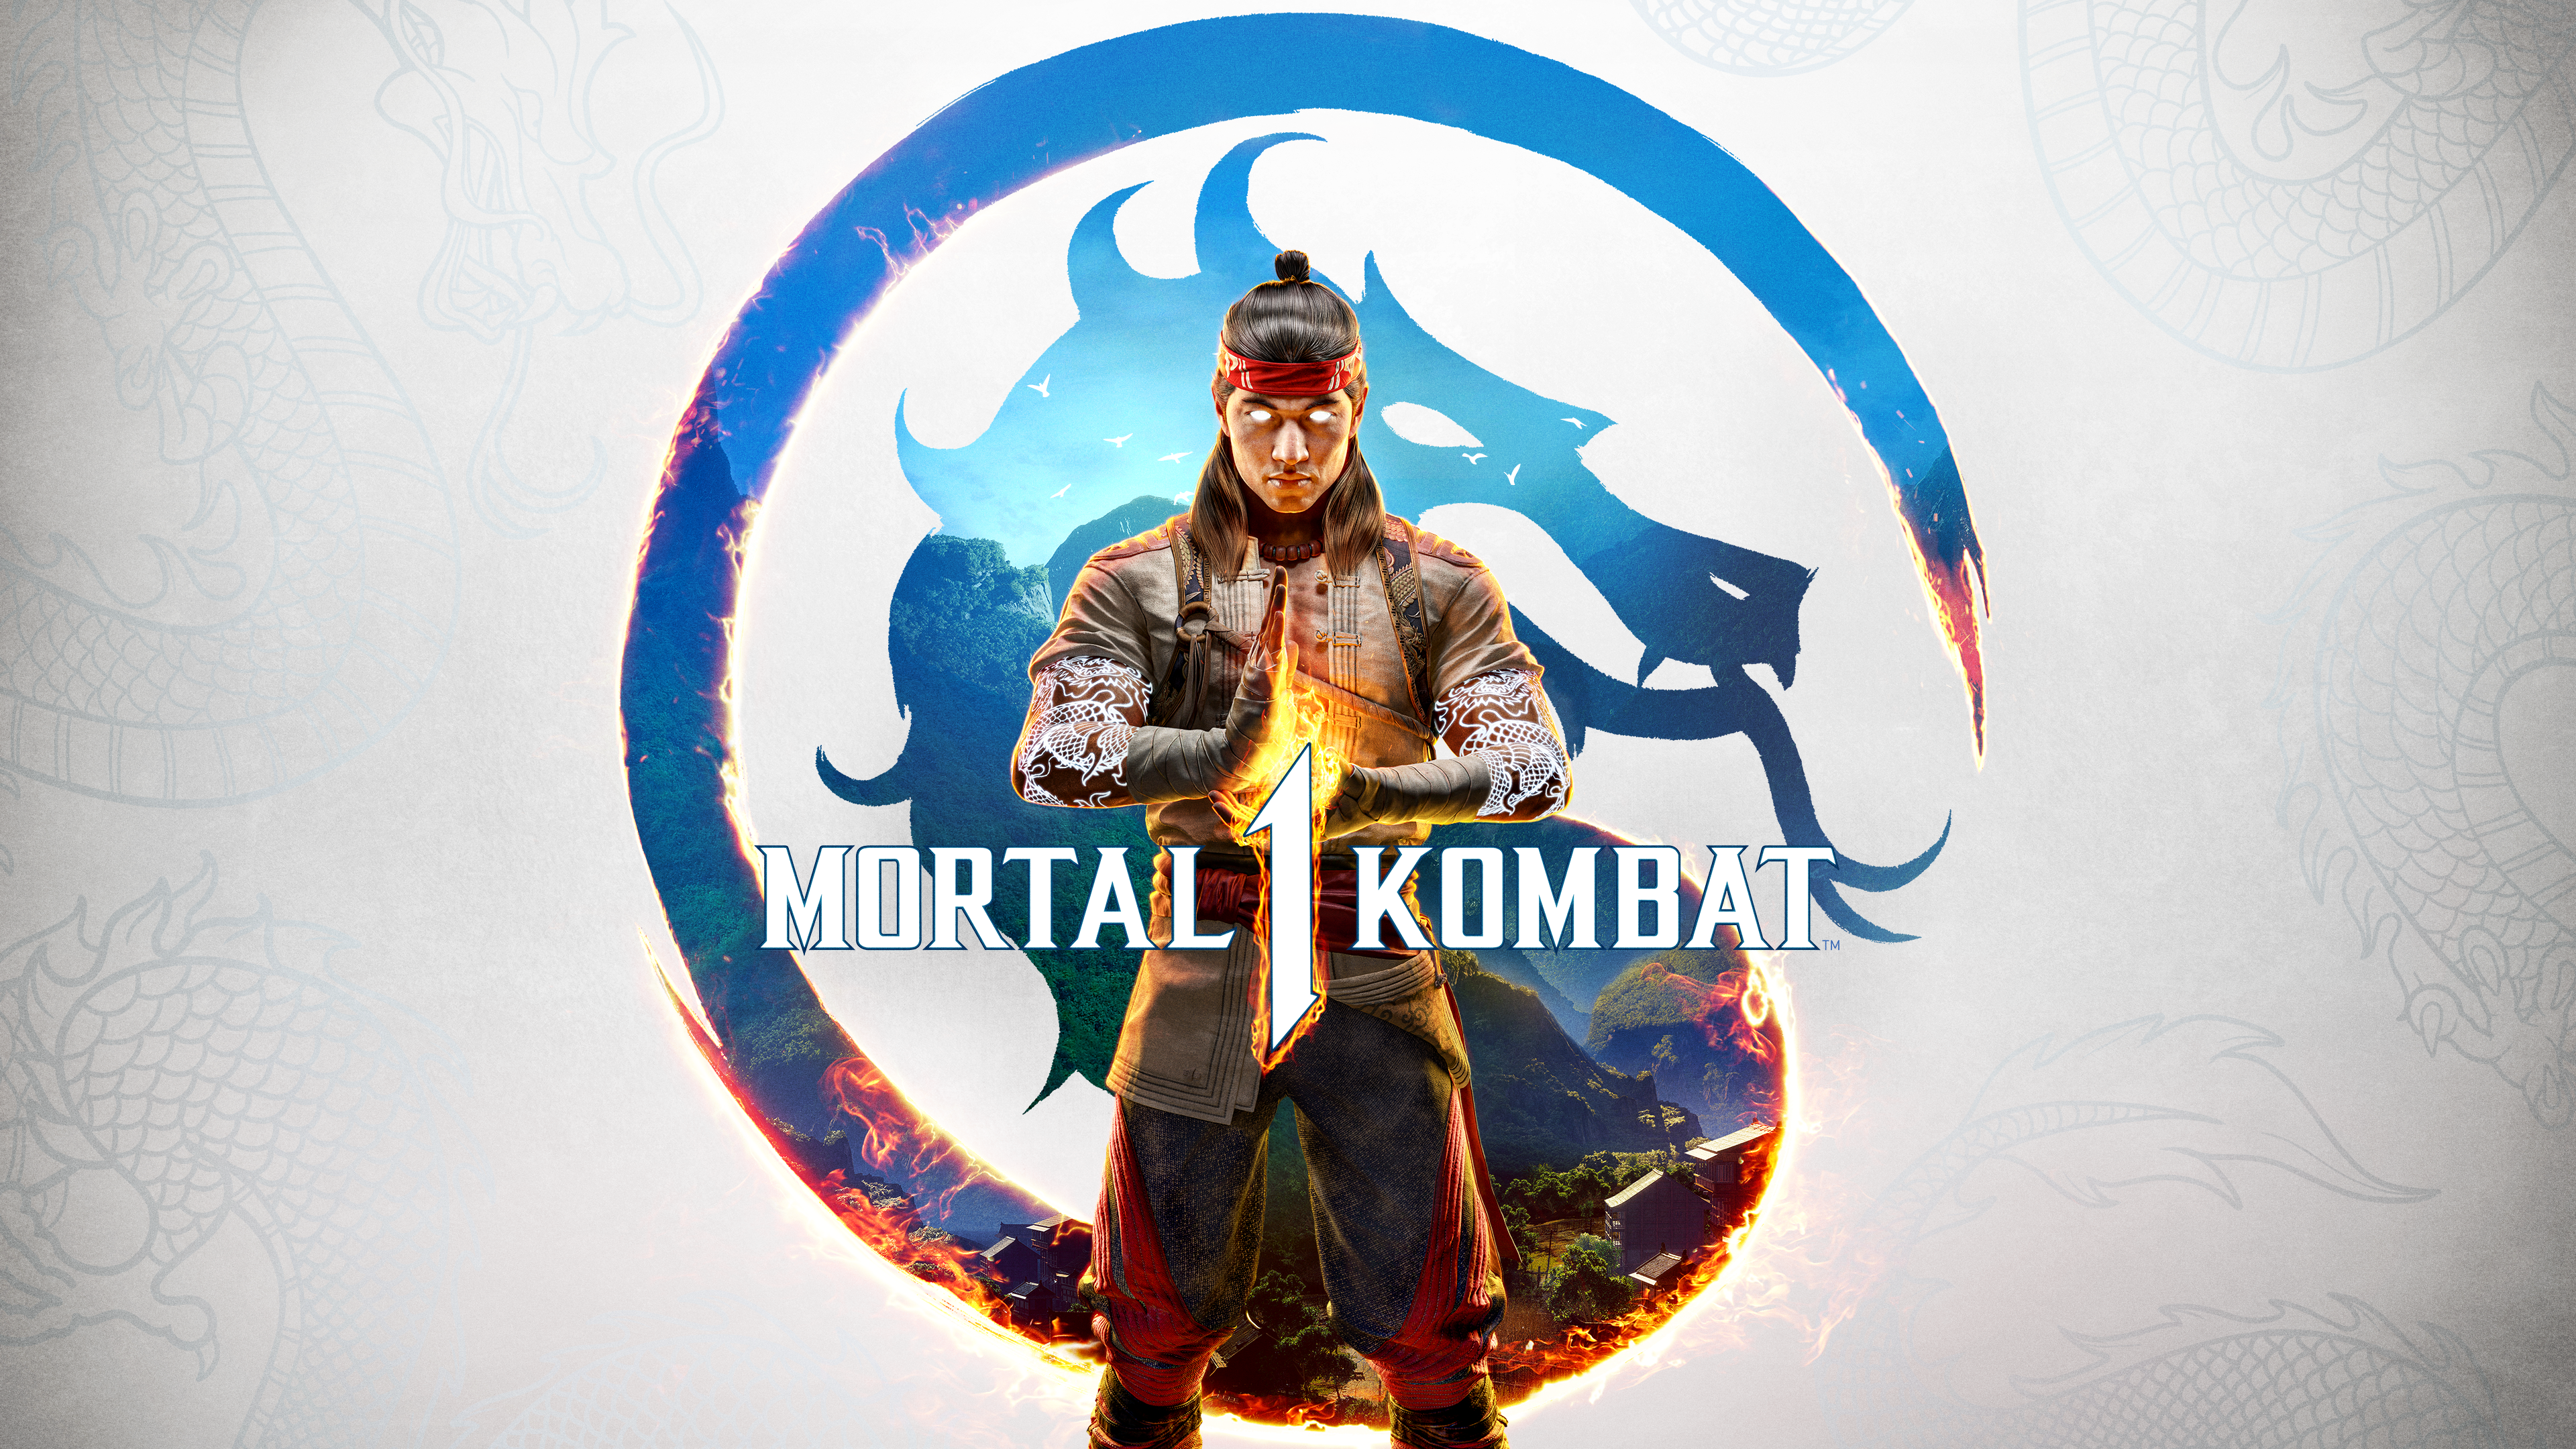 Mortal Kombat Wallpaper 4k Best Mortal Kombat Wallpaper 4k